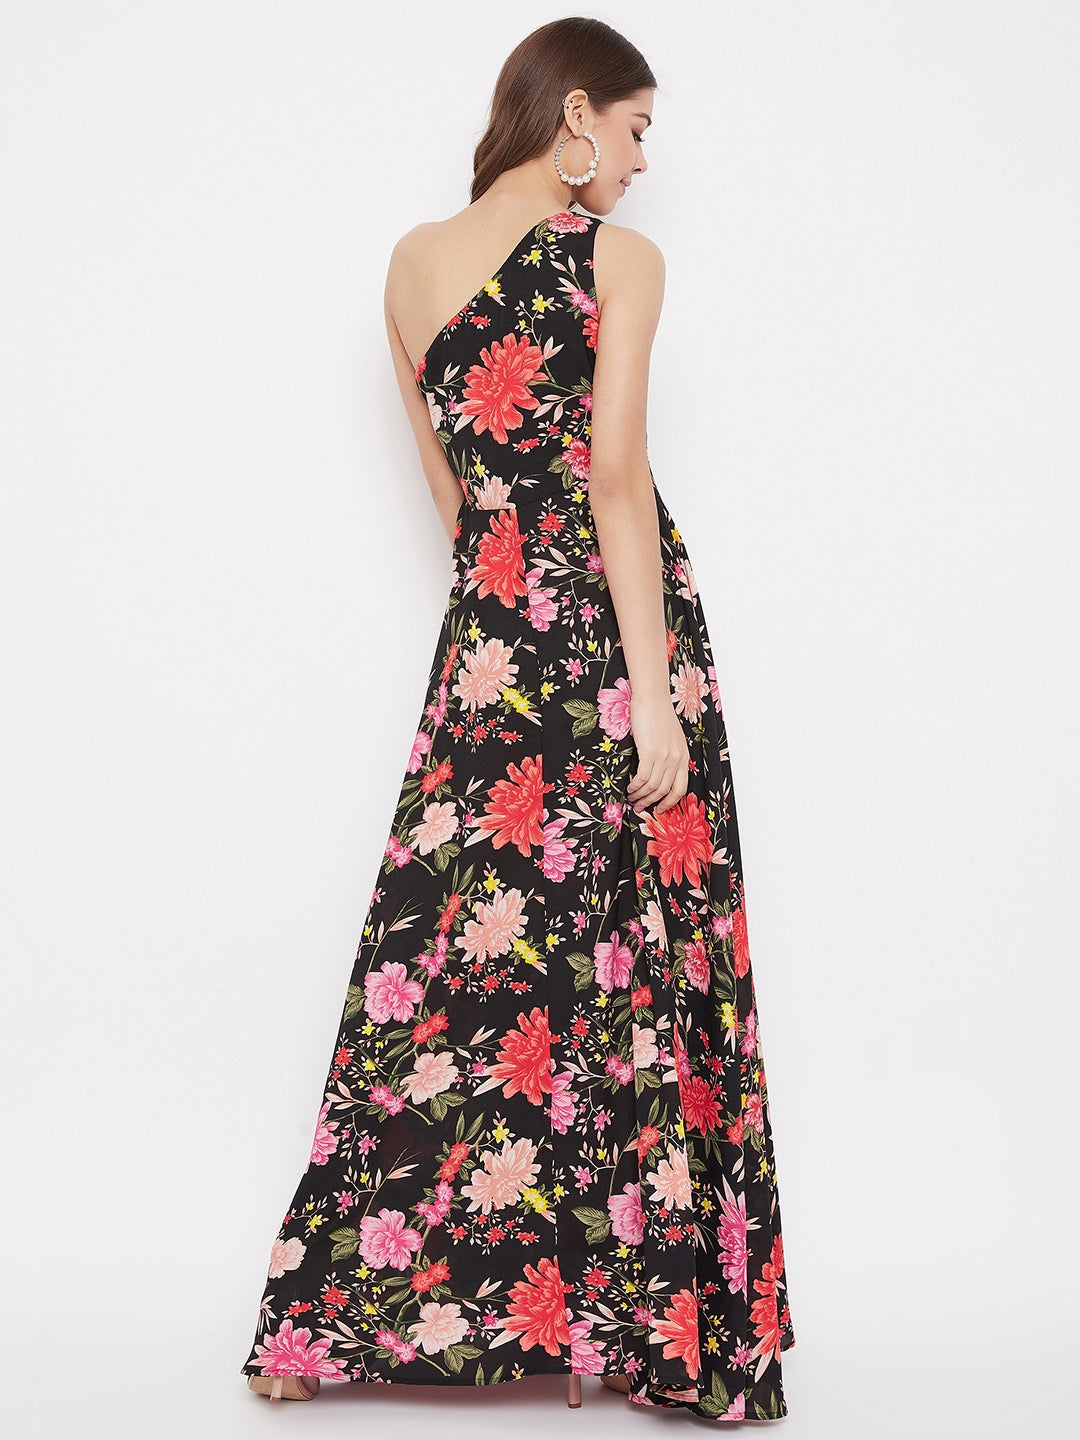 Berrylush Women Black Floral Printed One Shoulder Maxi Dress